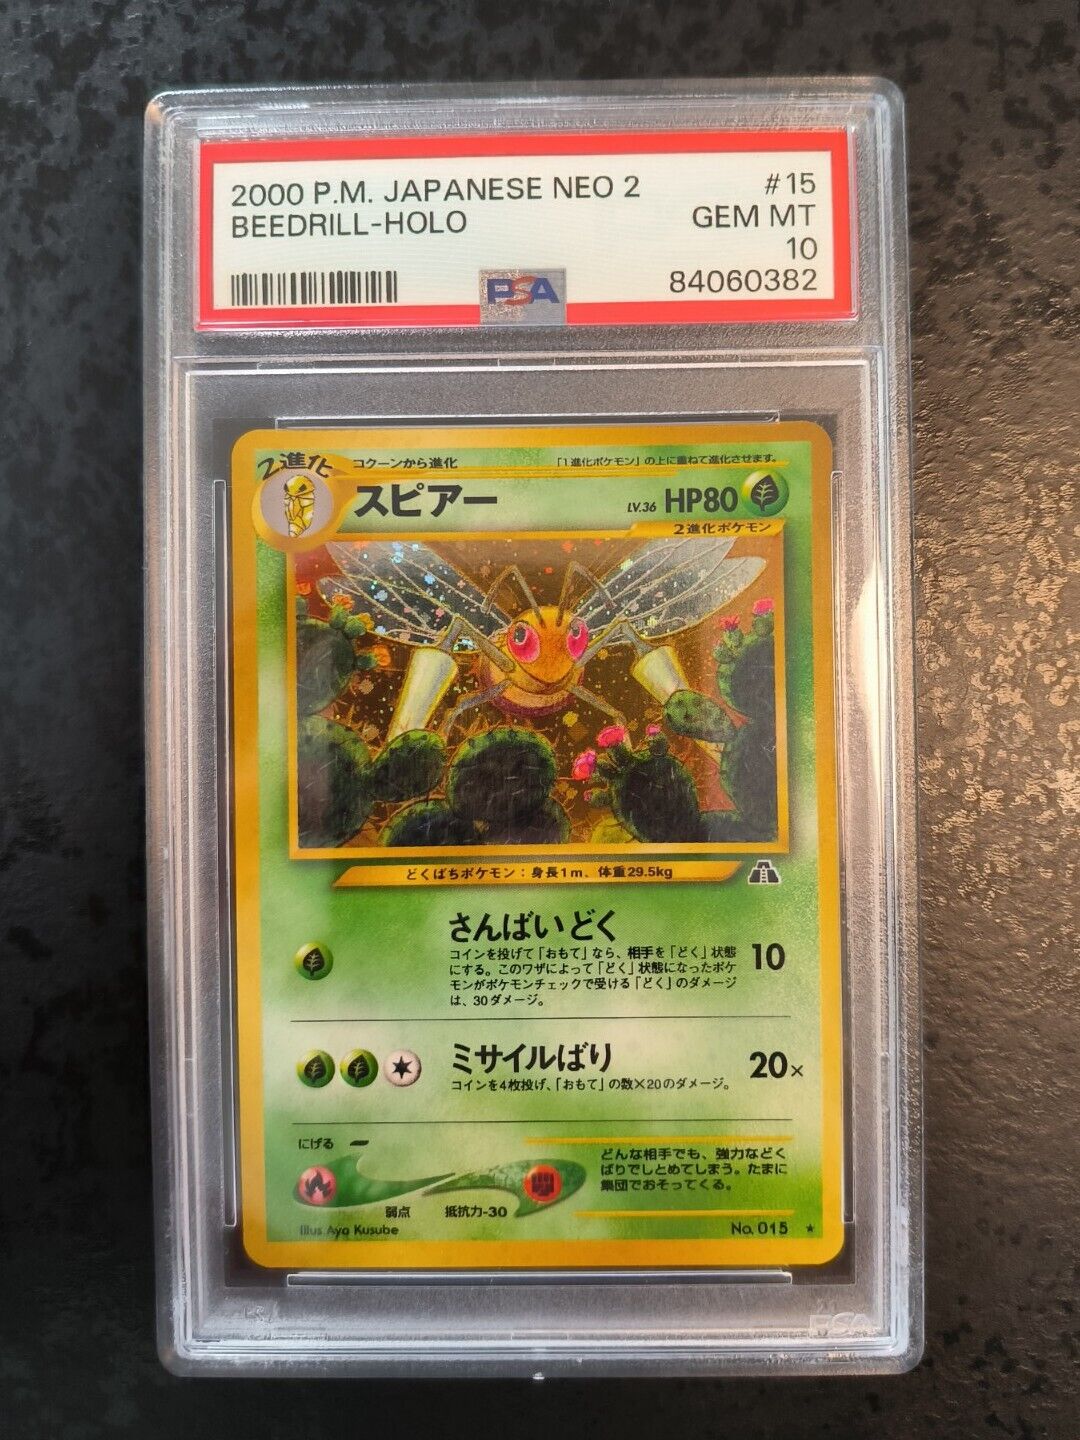 PSA 10 Gem Mint, Japanese Pokemon Card, Beedrill Holo #015, NEO 2000